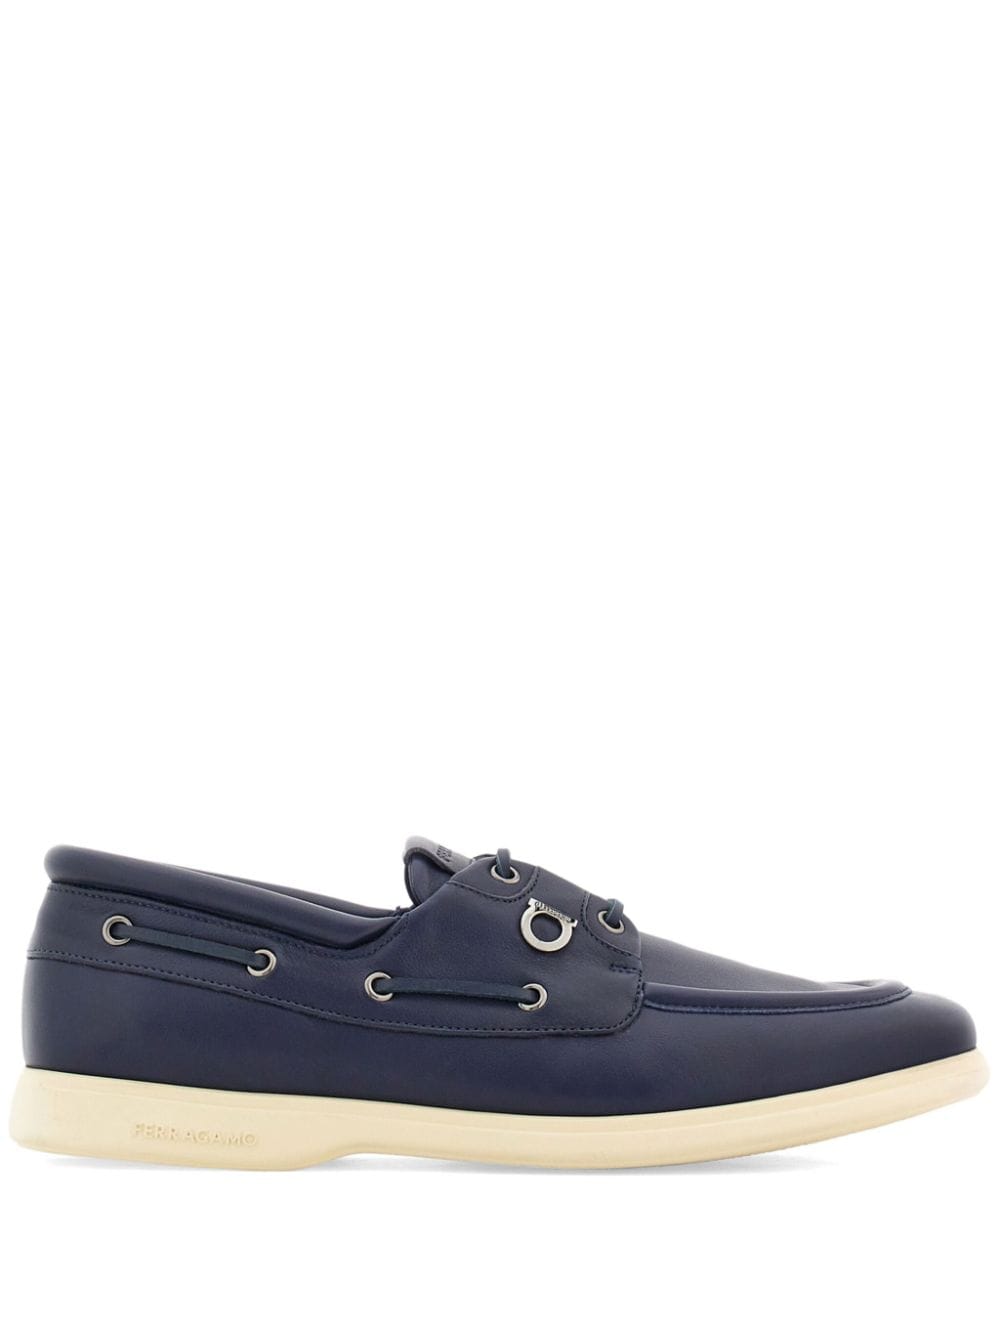 Ferragamo Gancini leather boat shoes - Blau